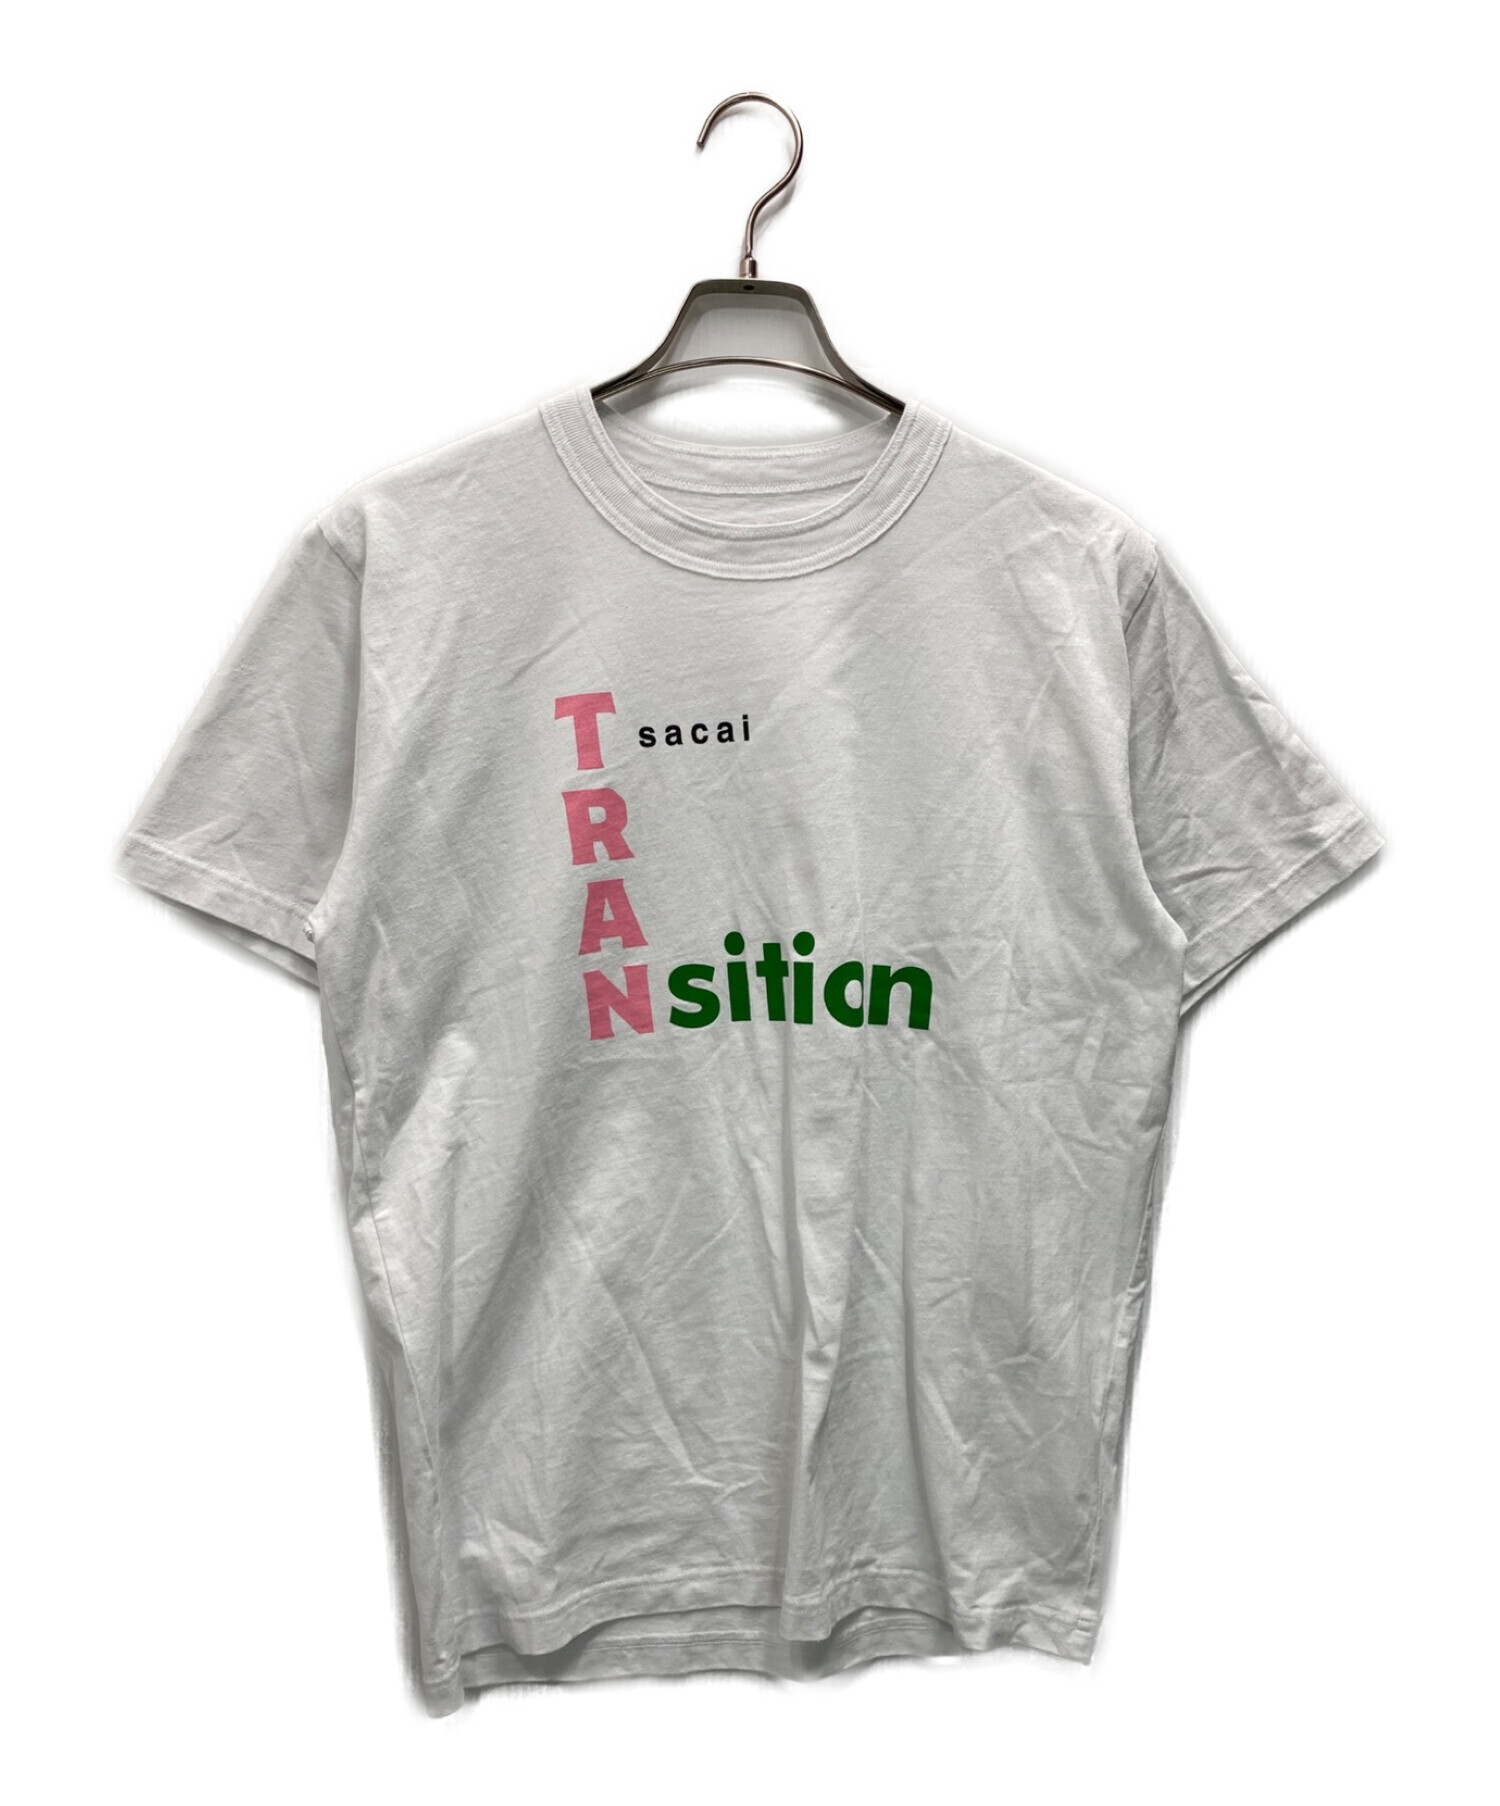 sacai (サカイ) TRANsition T-Shirt ホワイト サイズ:3